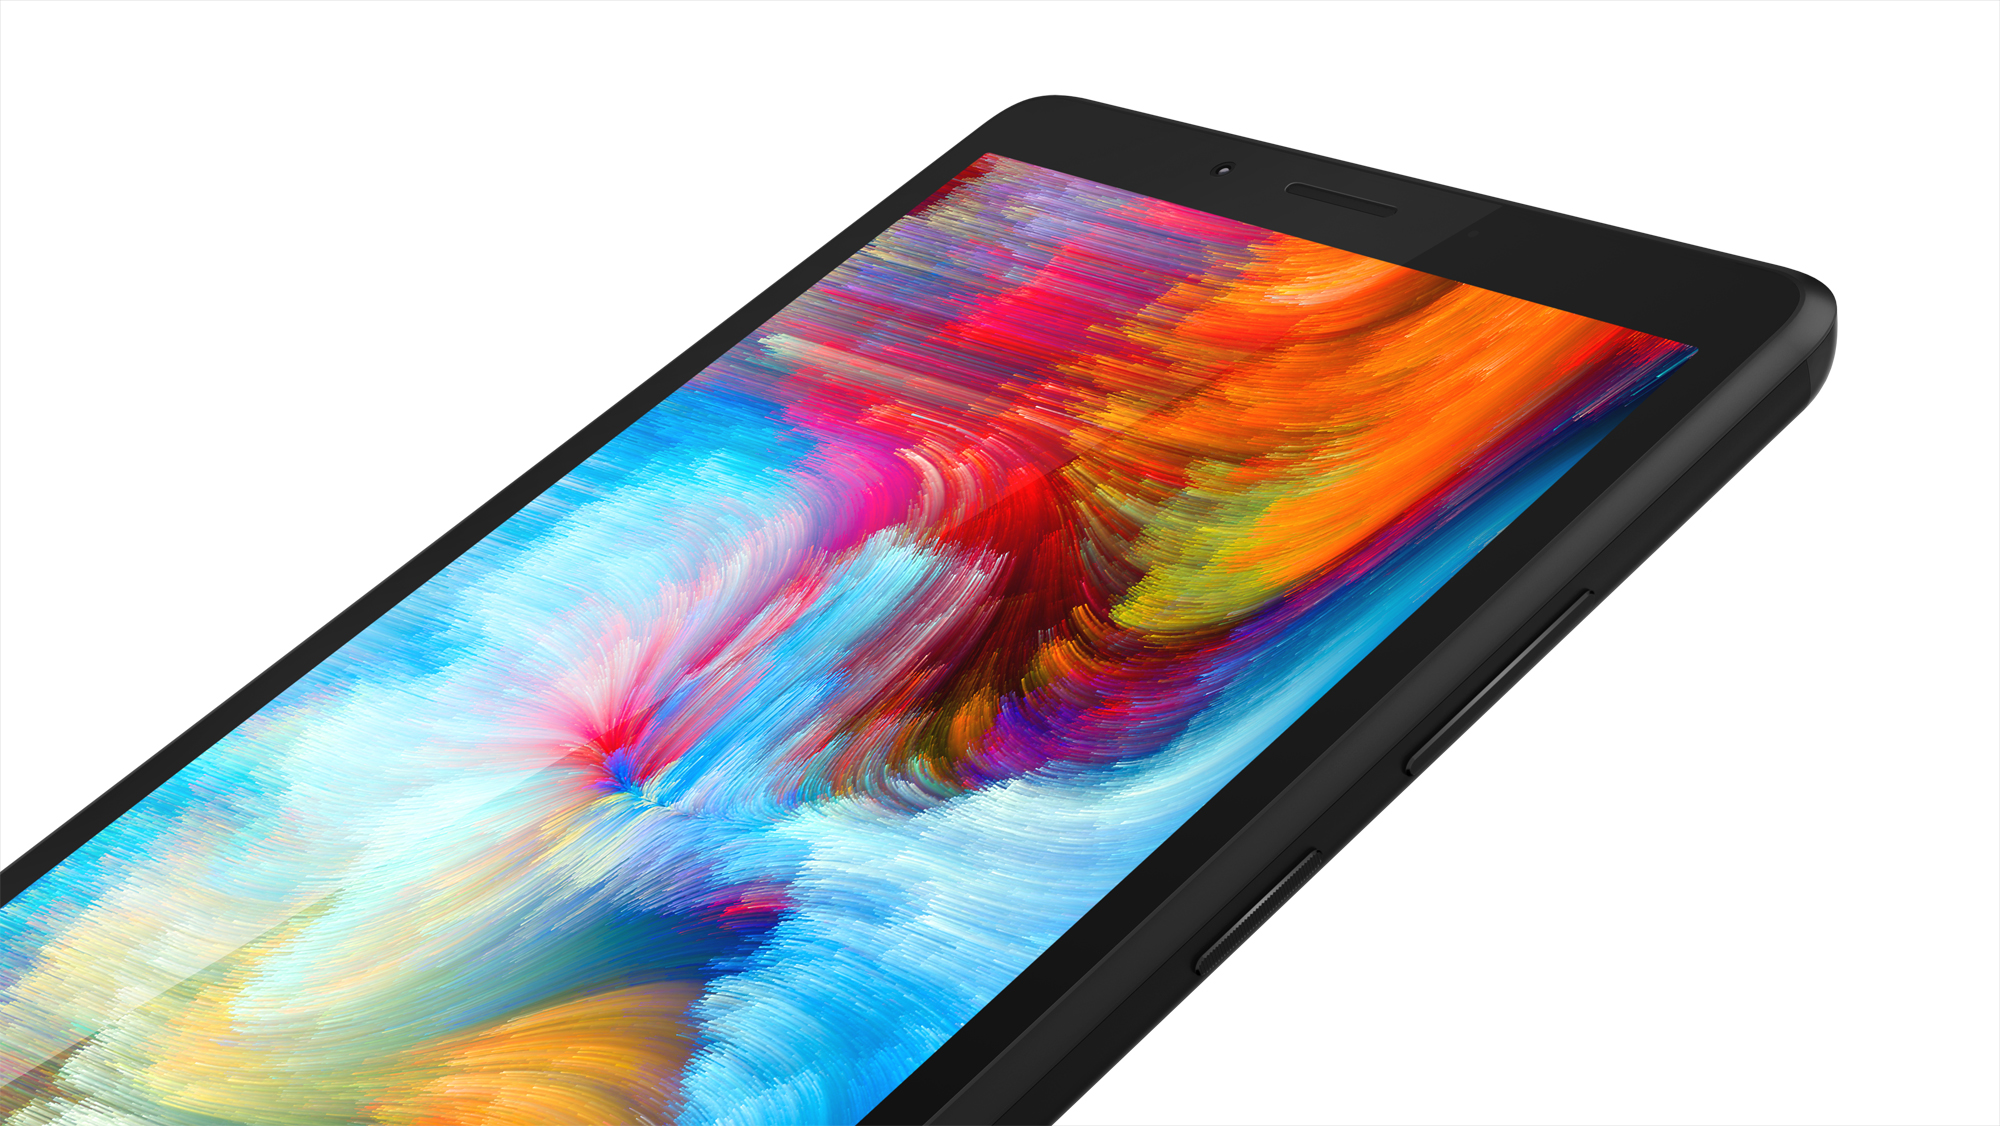 Lenovo Tab M7 7" Tablet, 16GB Storage, 1GB Memory, 1.3GHz Quad-Core Processor, Android 9 Pie Go Edition, HD Display - image 5 of 8